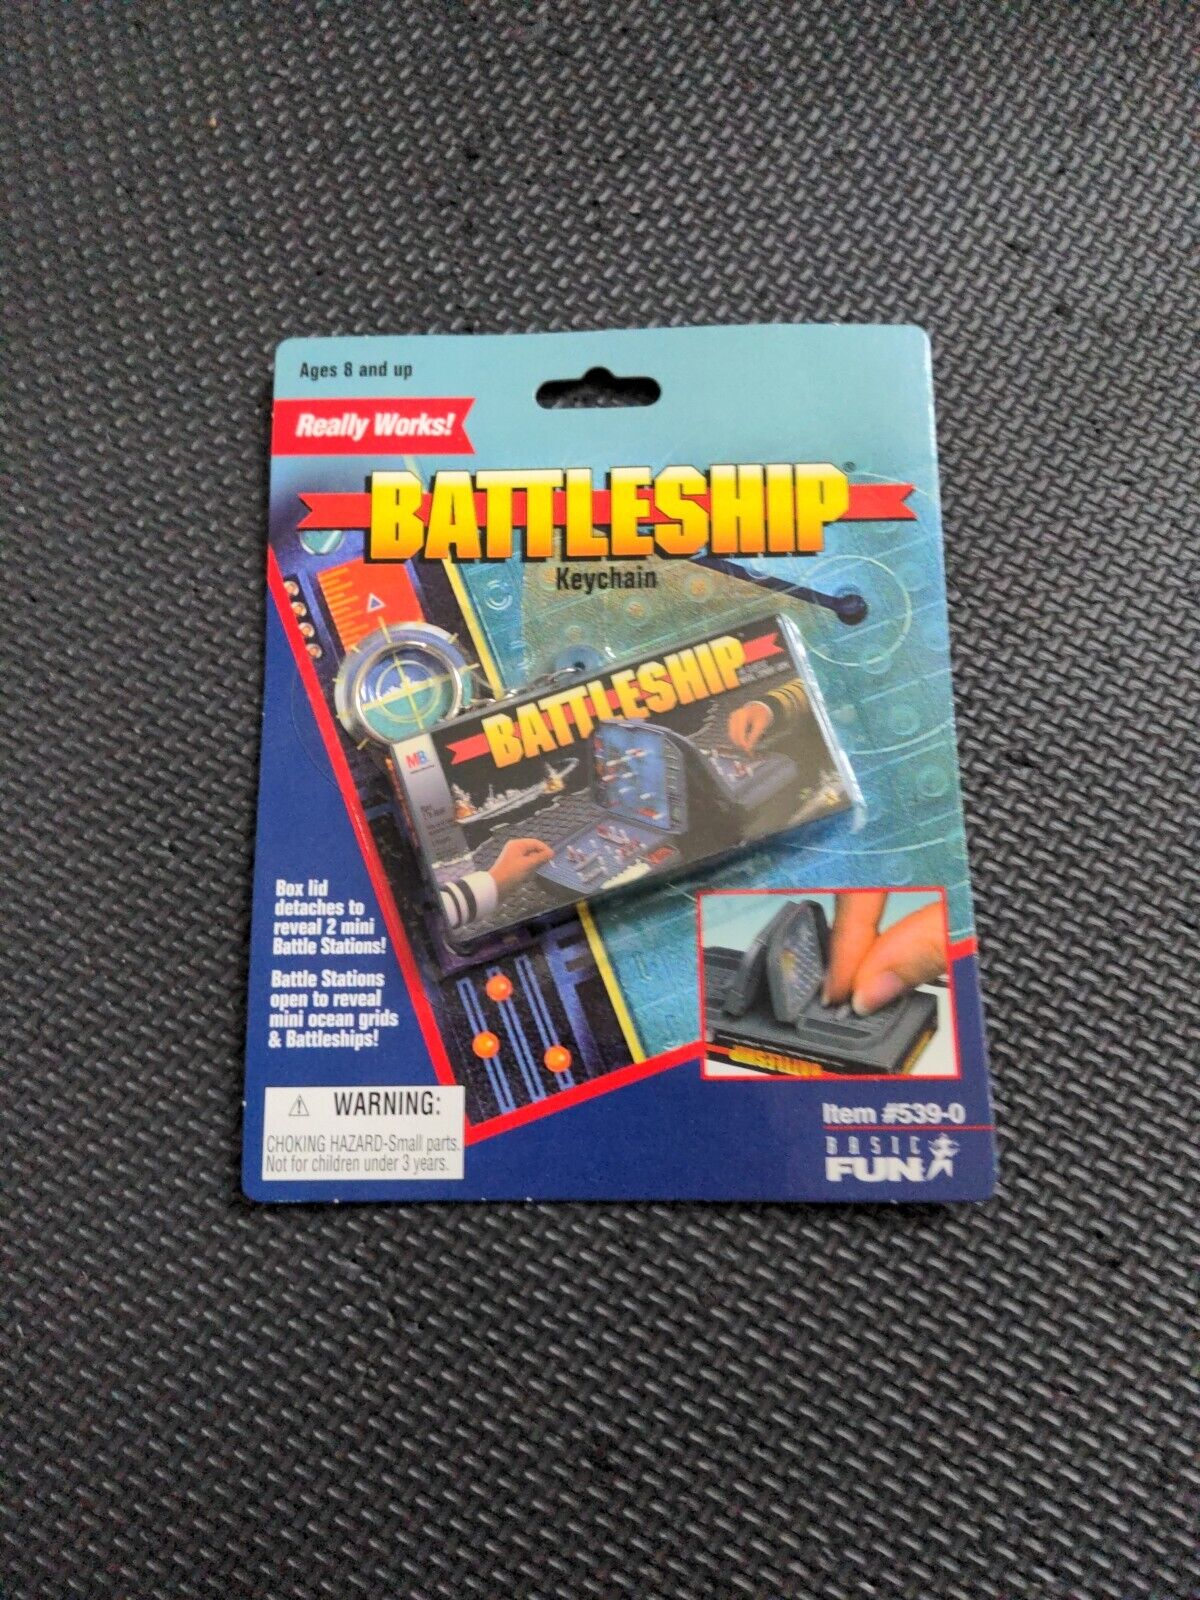 1999 Battleship by Hasbro - Mini Keychain Board Game - Basic Fun - Sealed Pkg